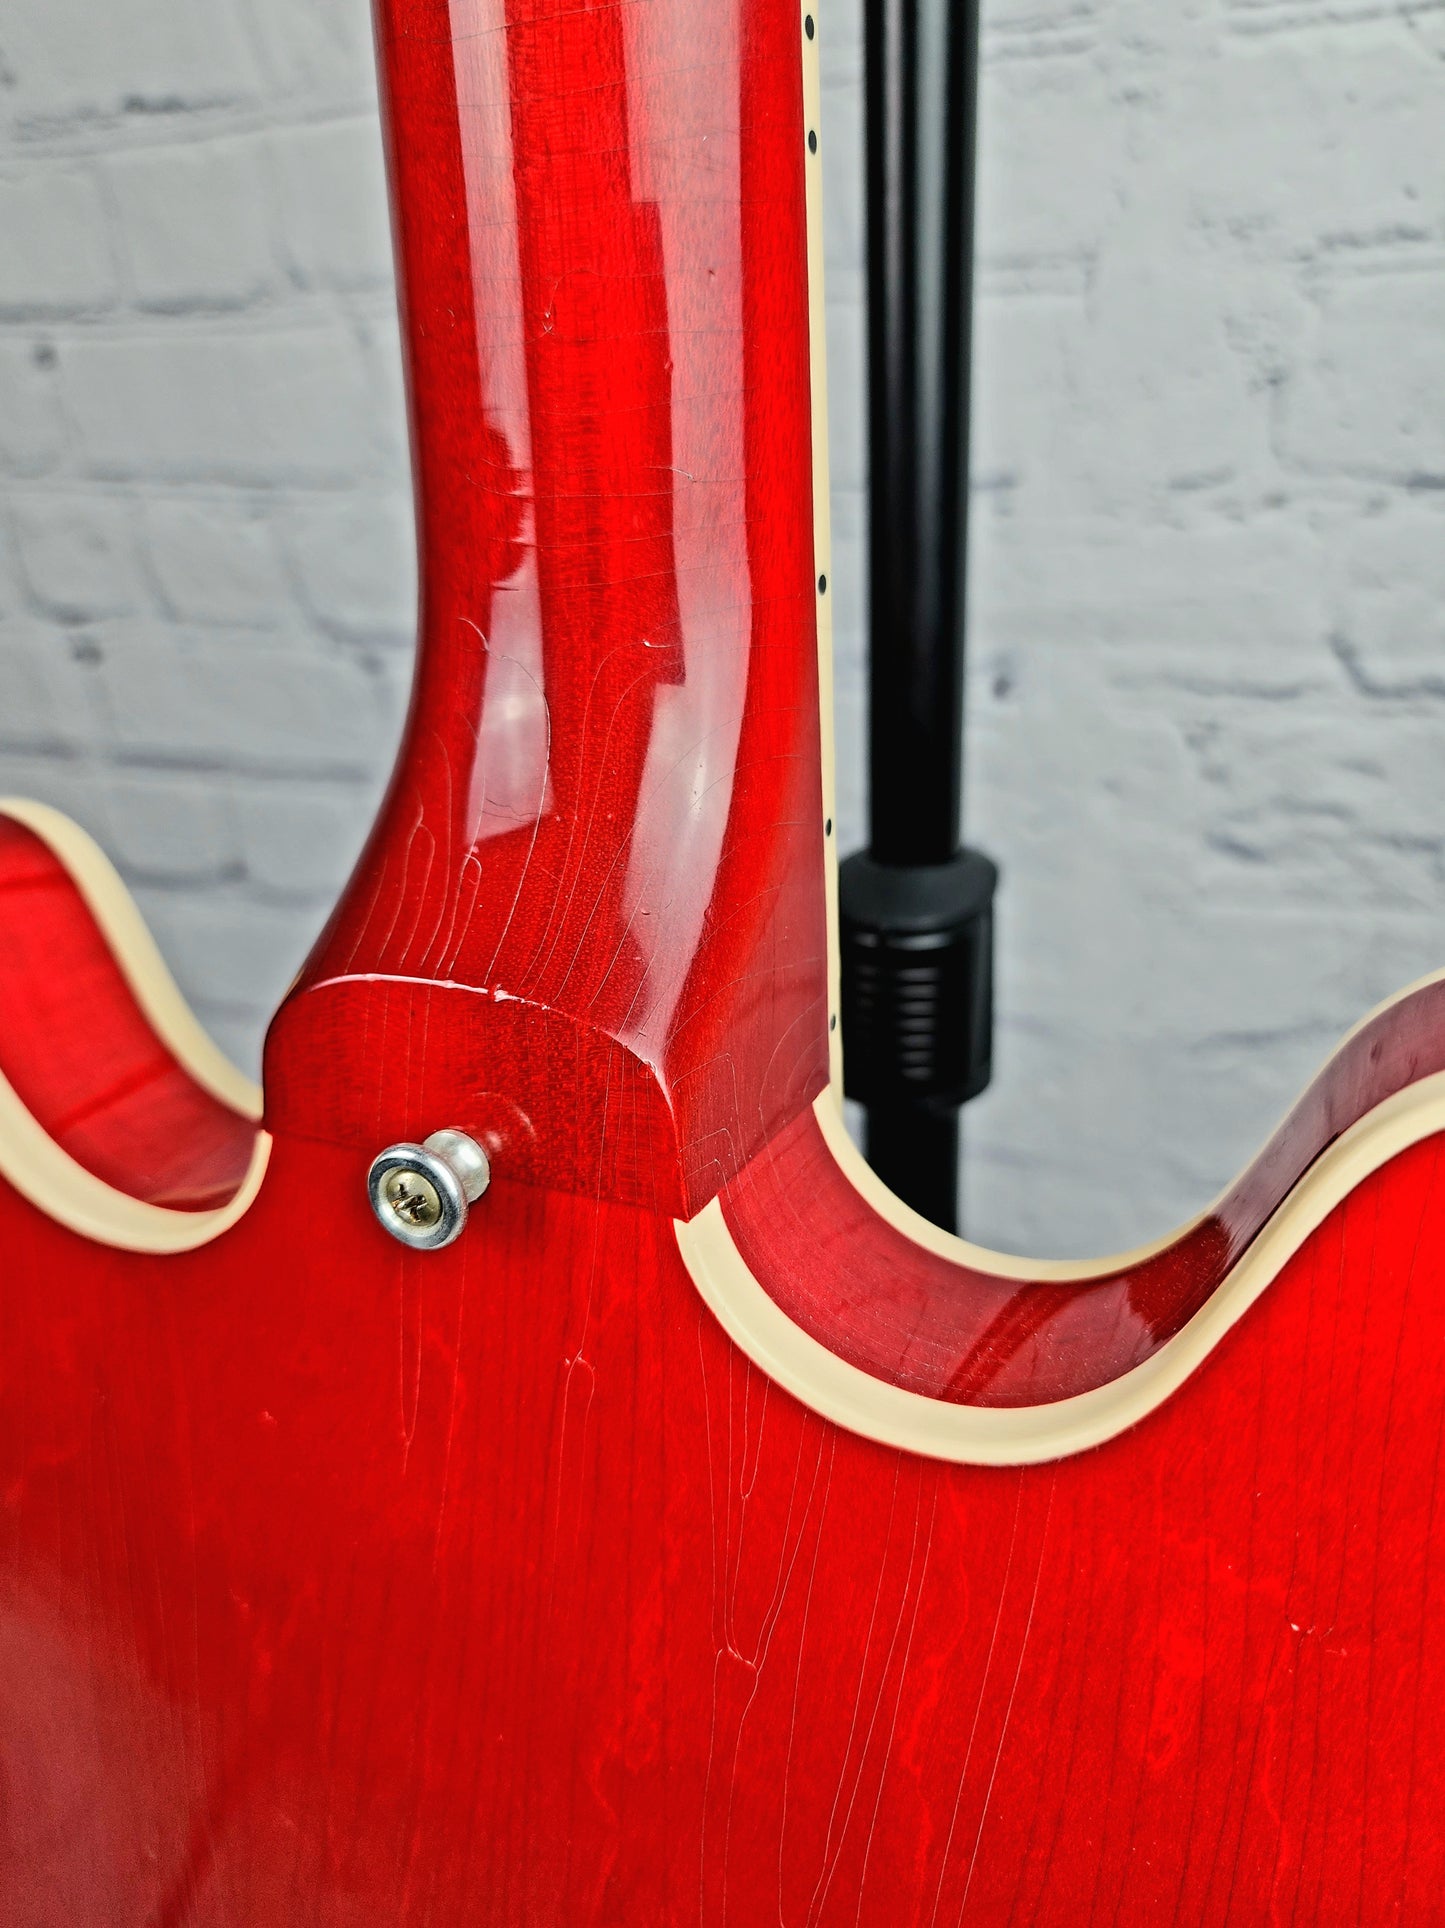 Heritage Guitars H-535 TRC Artisan Aged Transparent Cherry Semi-Hollow Electric Guitar